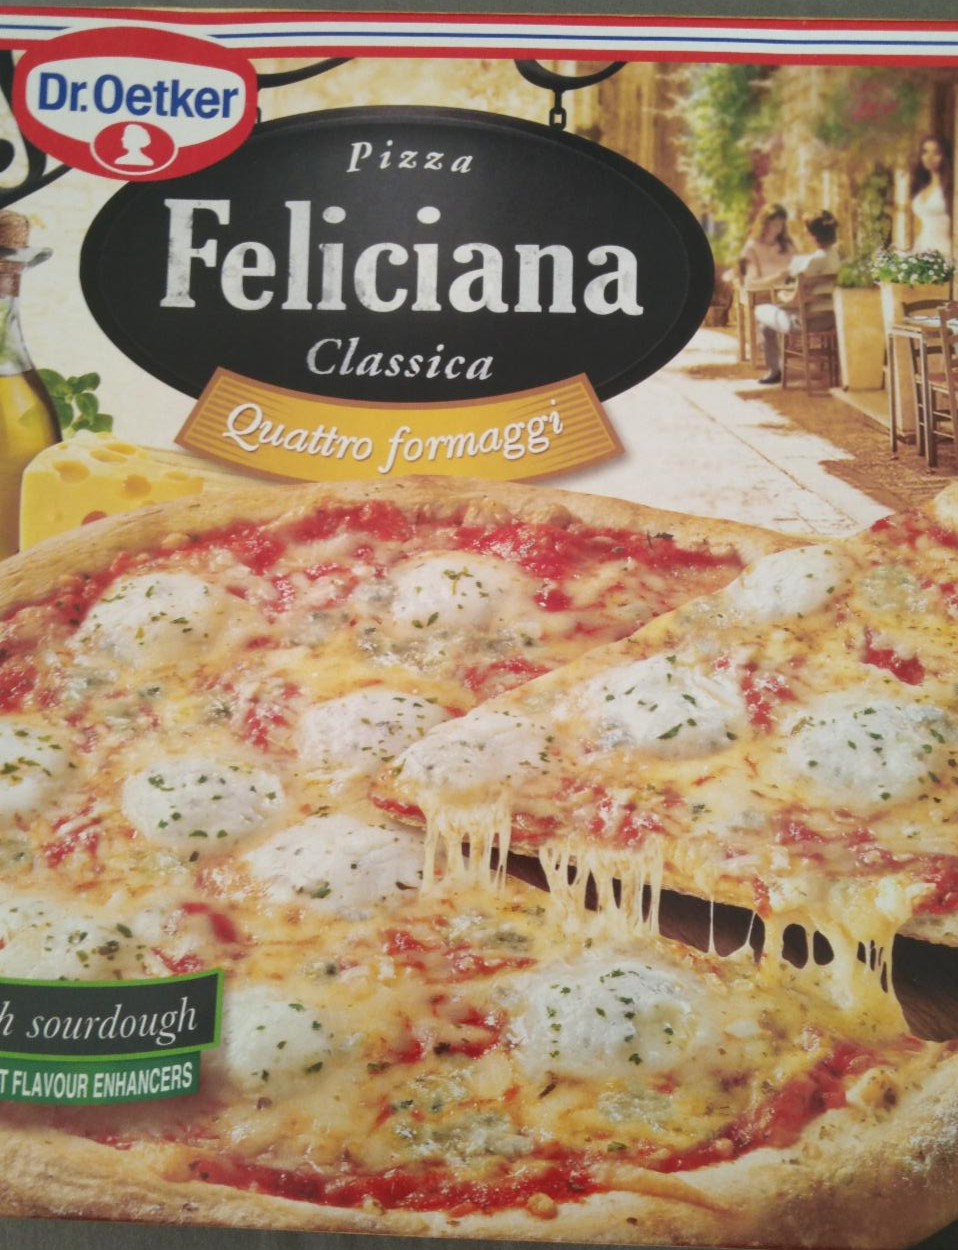 Fotografie - Pizza Feliciana classica quatro formaggi Dr.Oetker